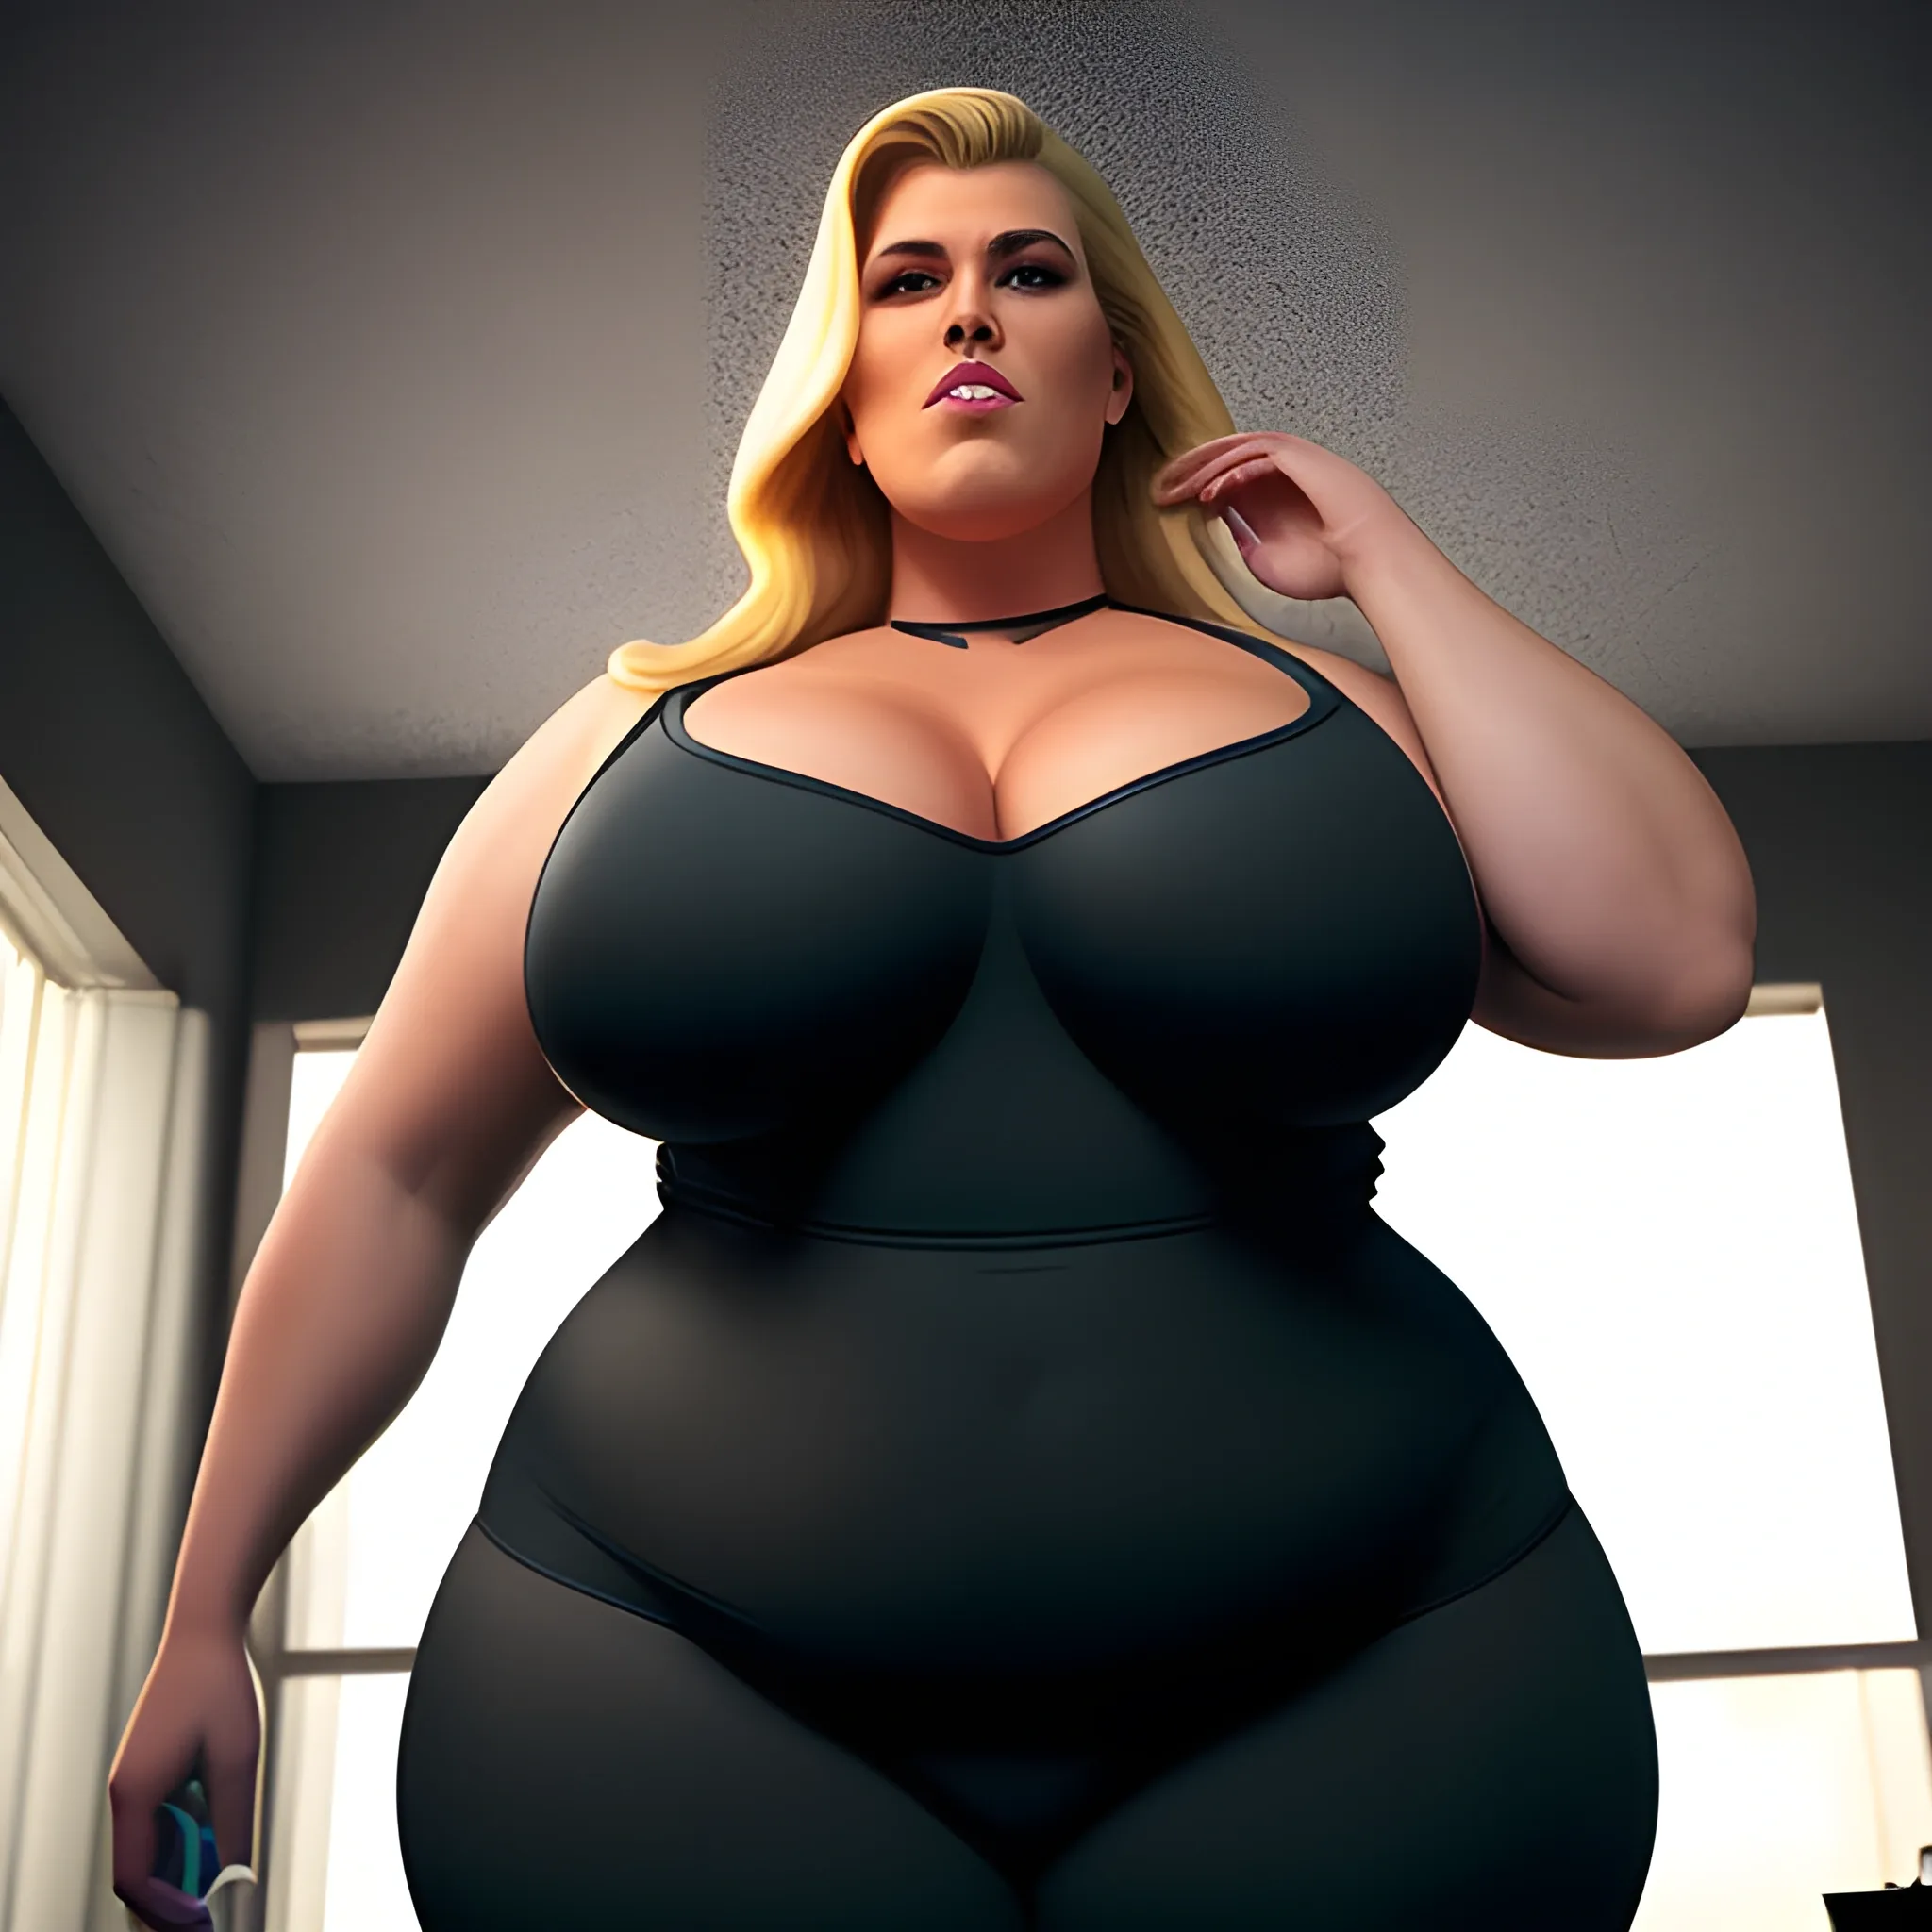 Big booty Latina, big boobs, swimsuit, realistic, tight 